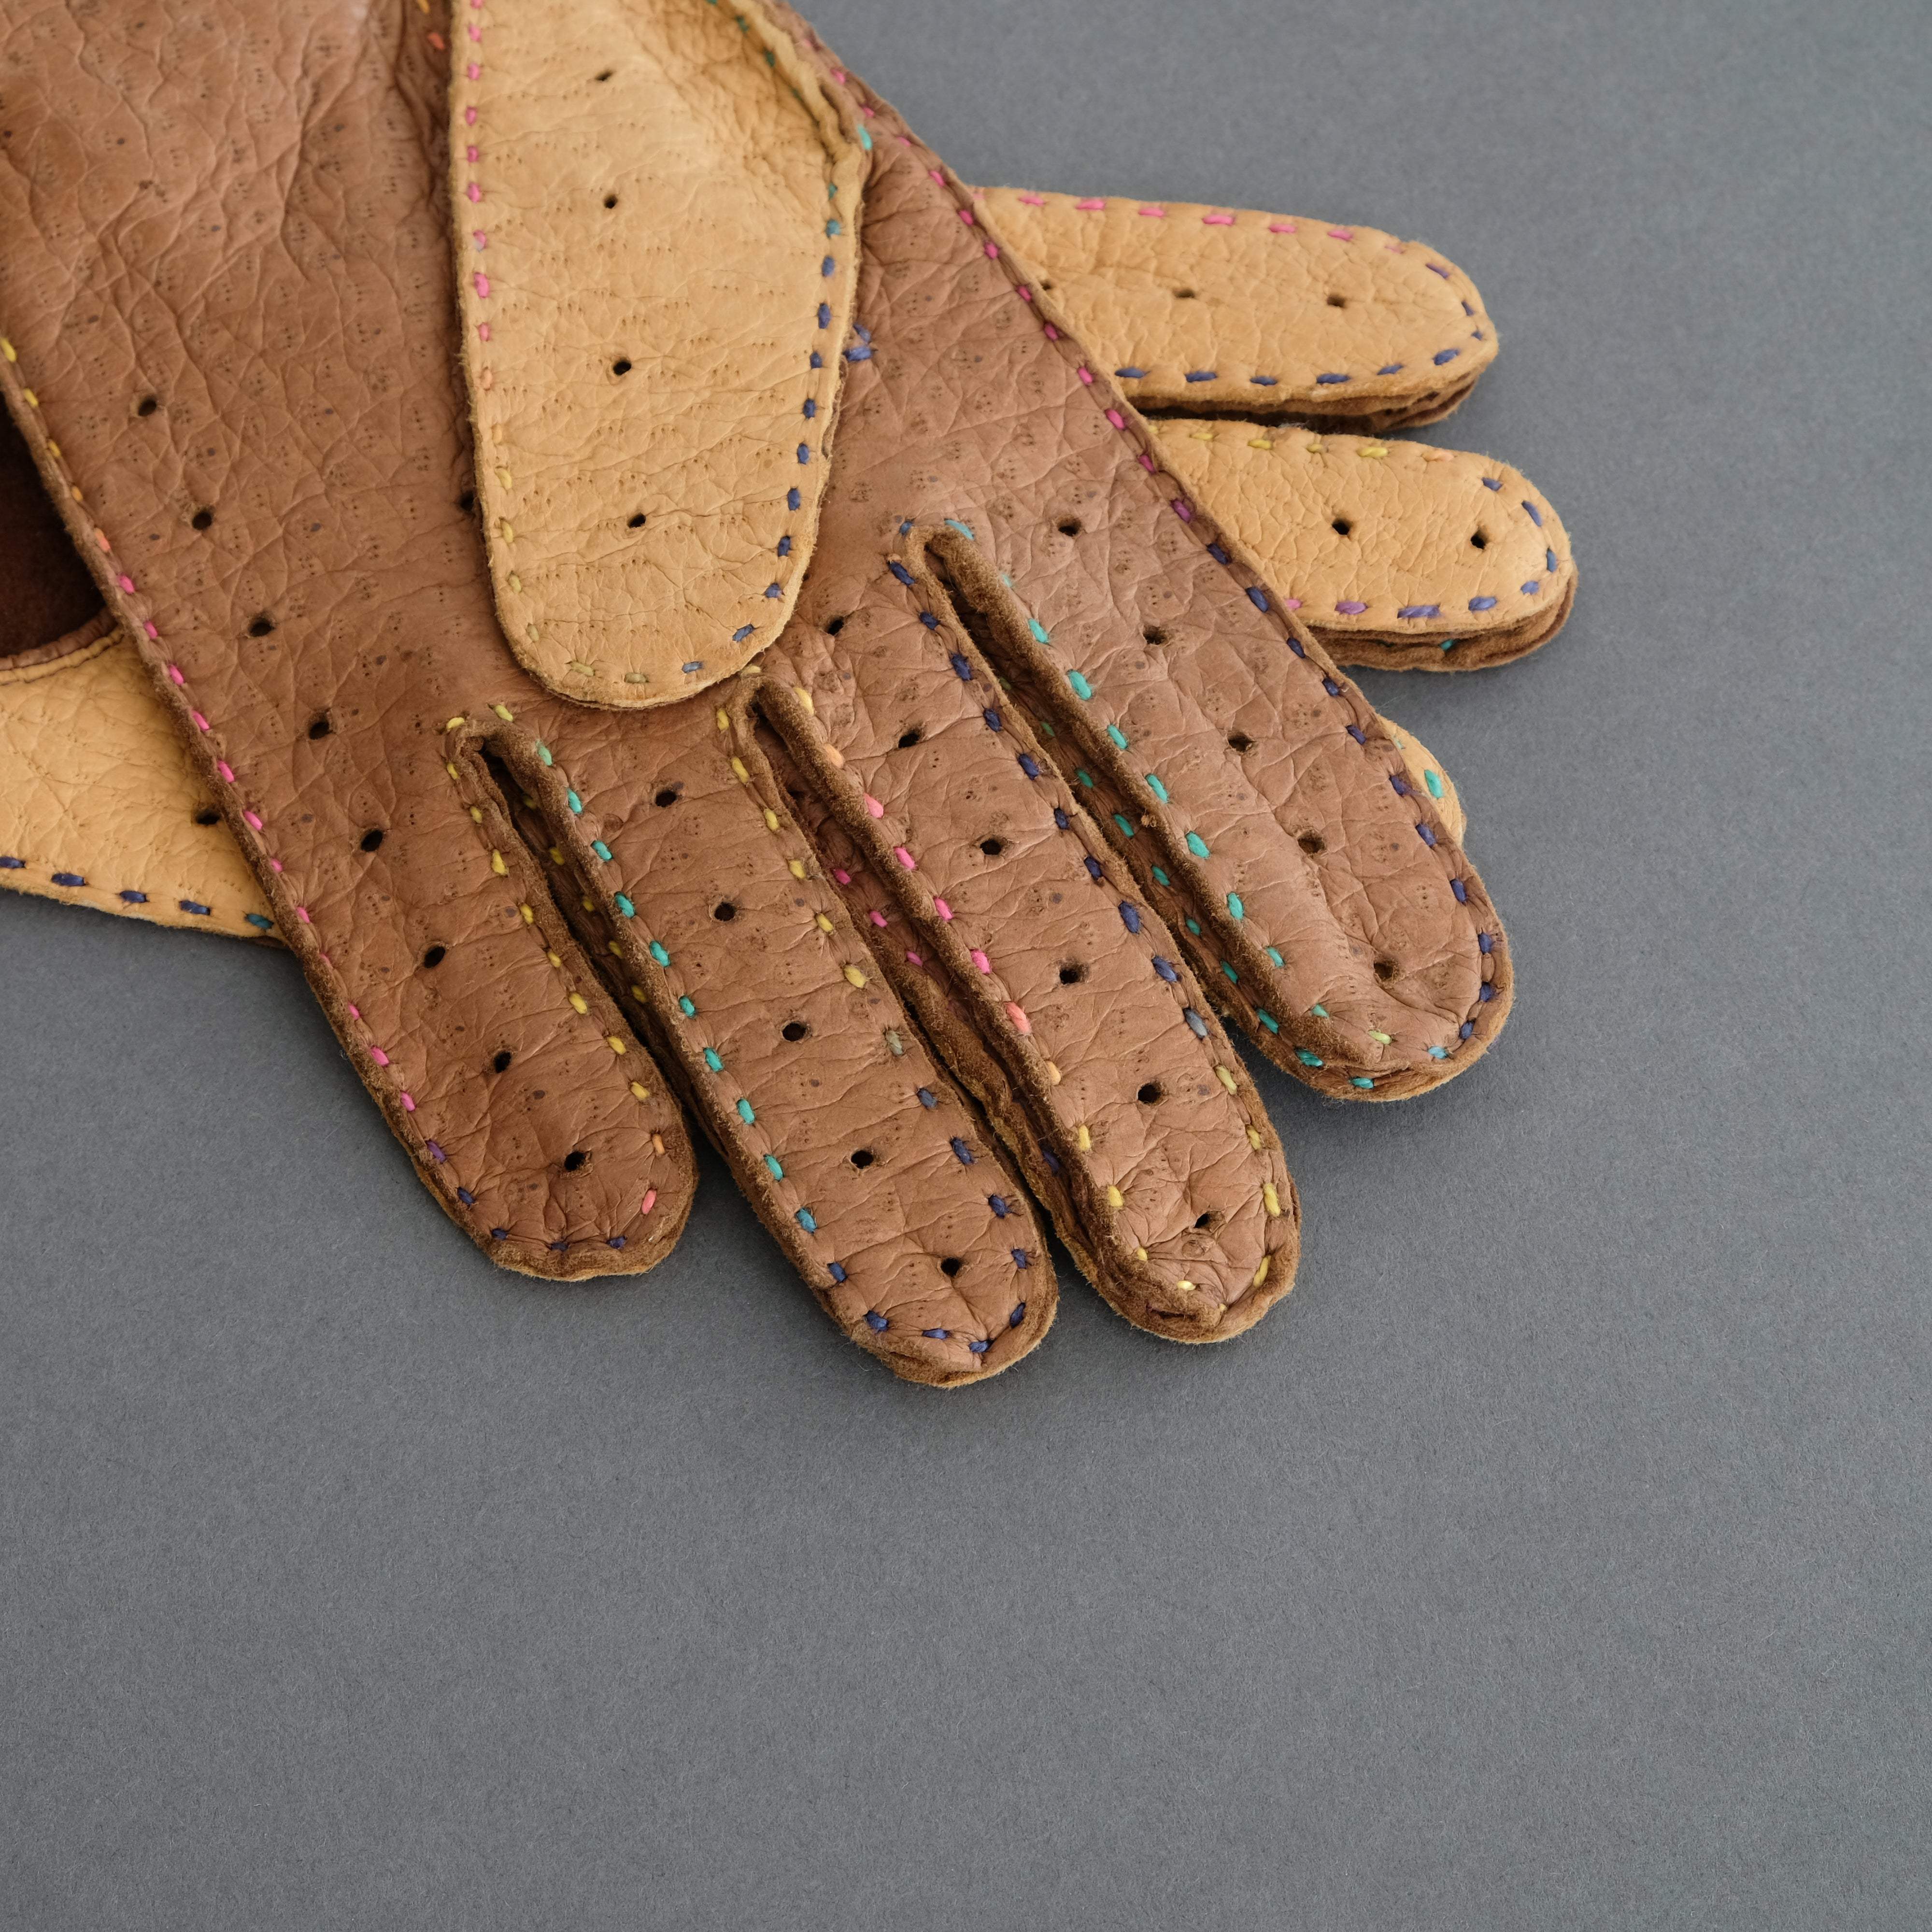 Gentlemen's Unlined Driving Gloves from Brown/Cognac Peccary - TR Handschuhe Wien - Thomas Riemer Handmade Gloves